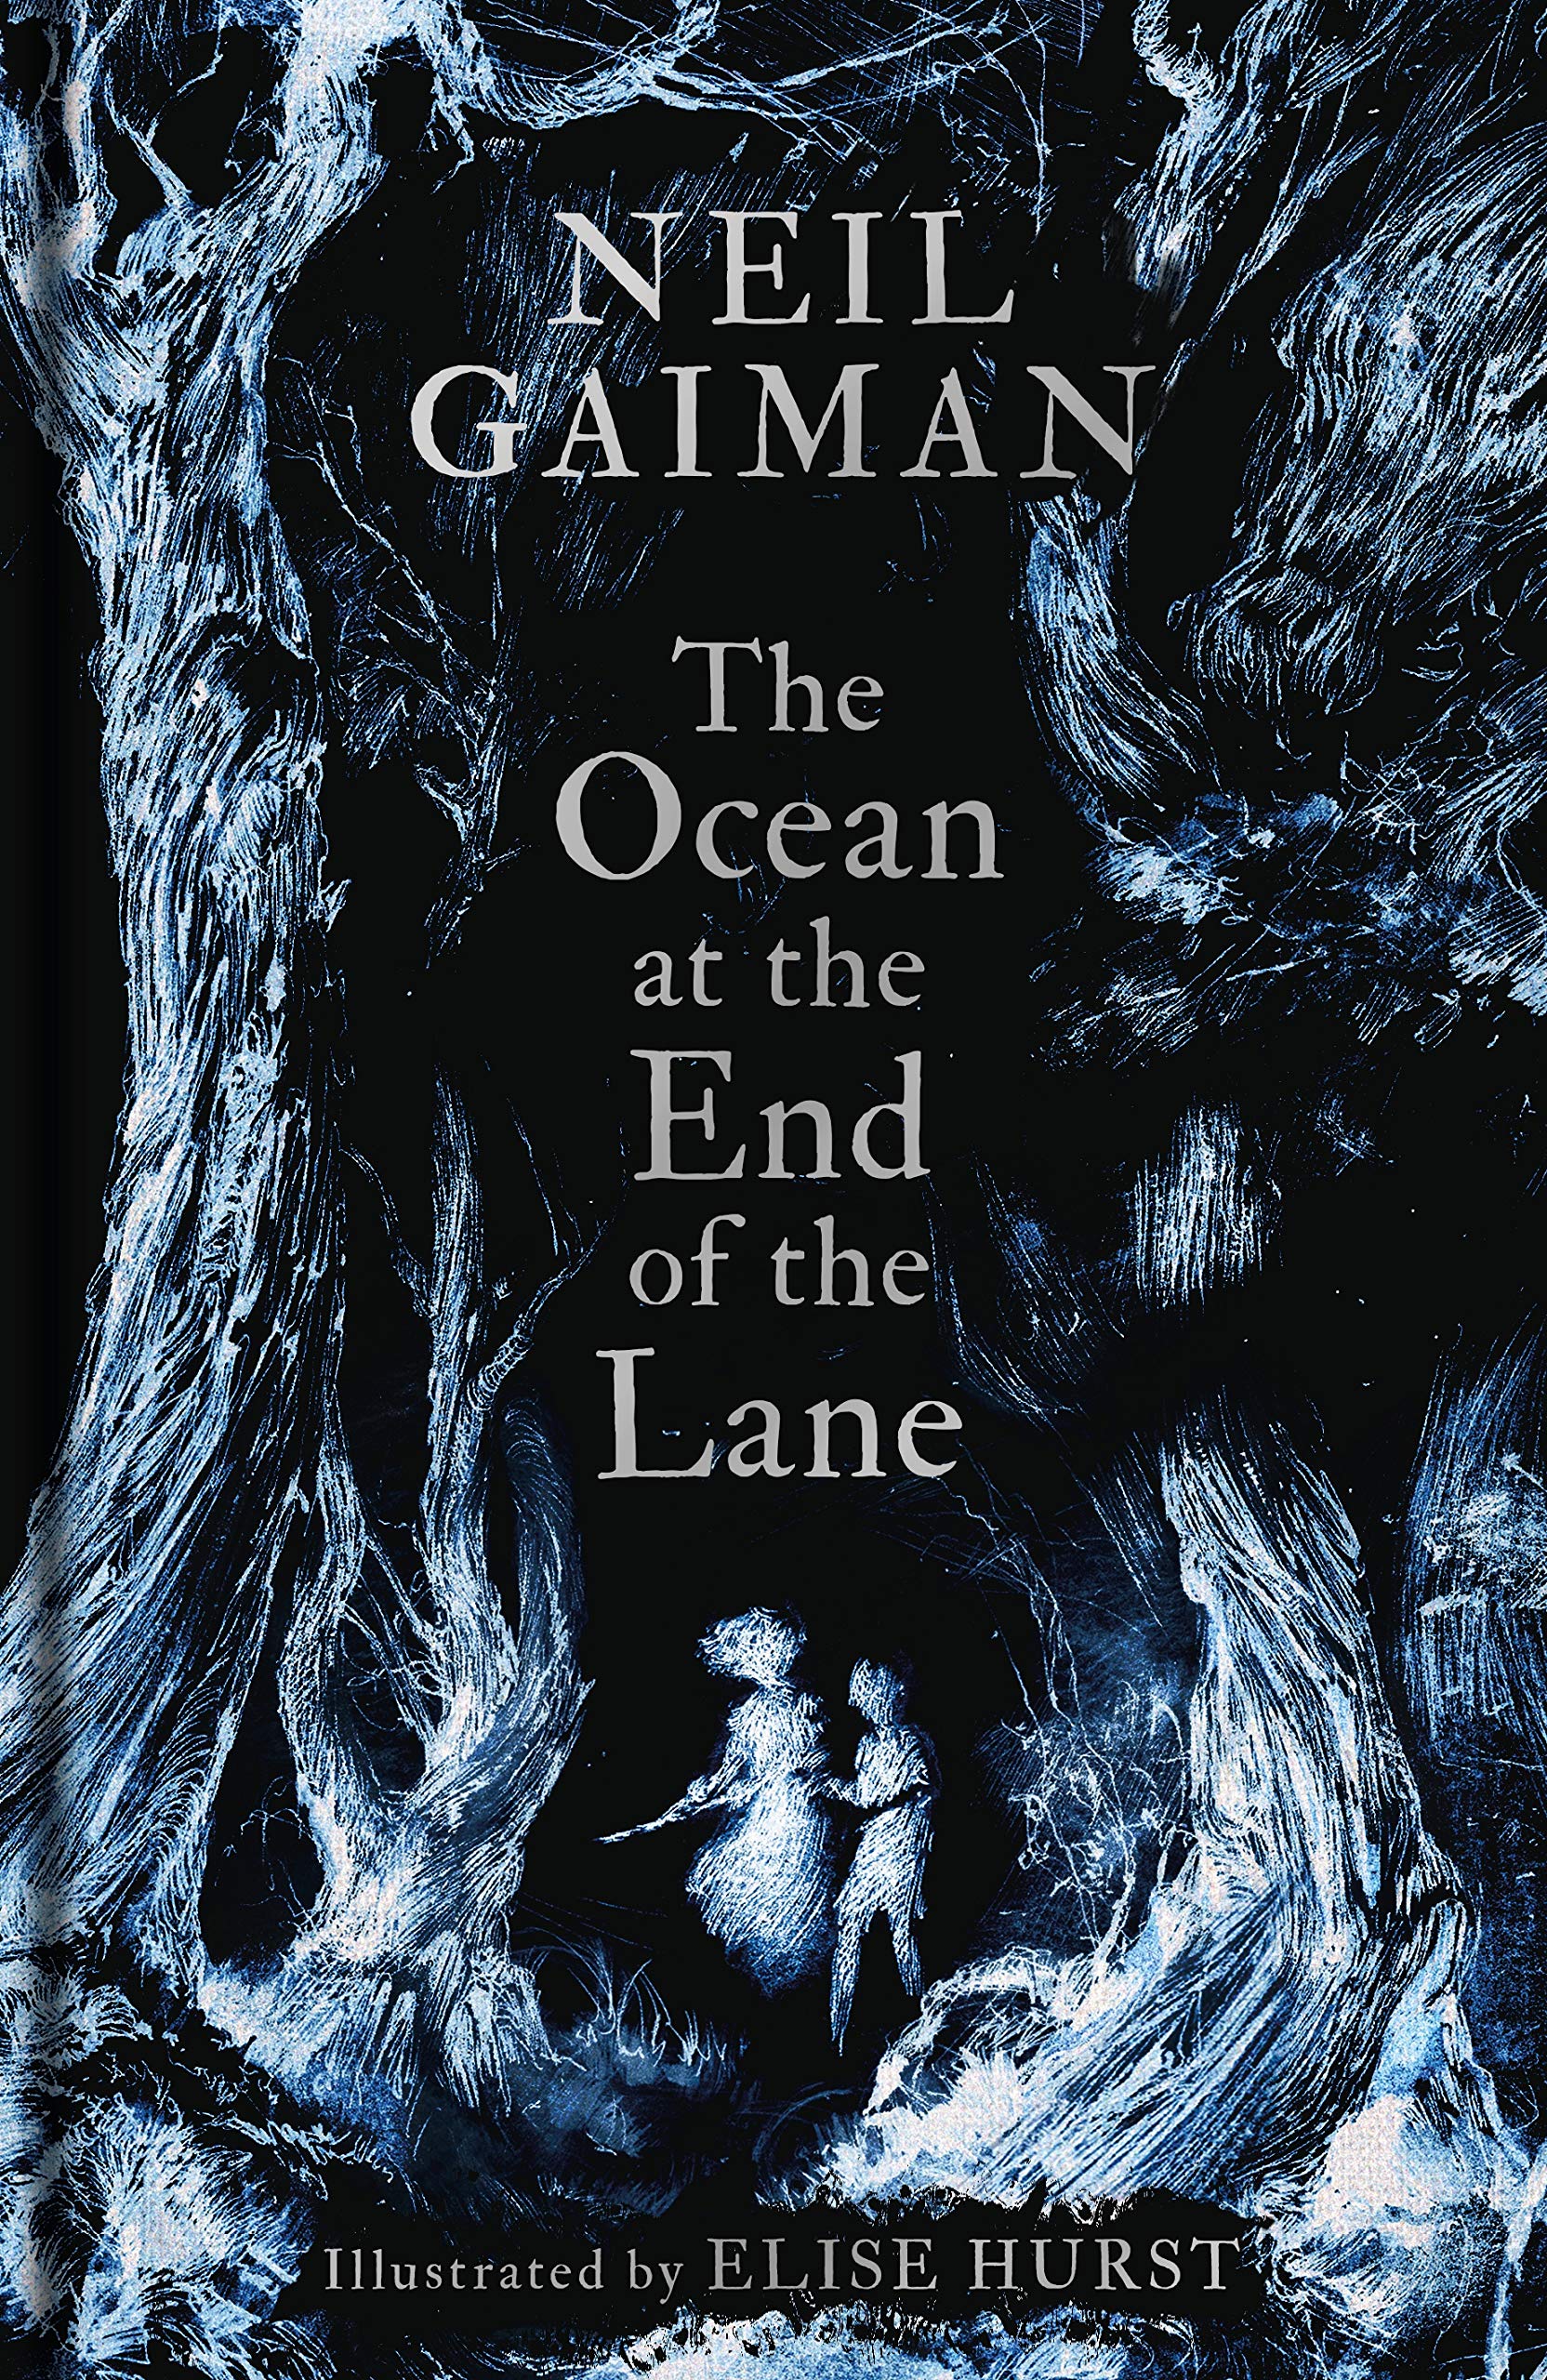 Ocean at the end of the lane | Neil Gaiman